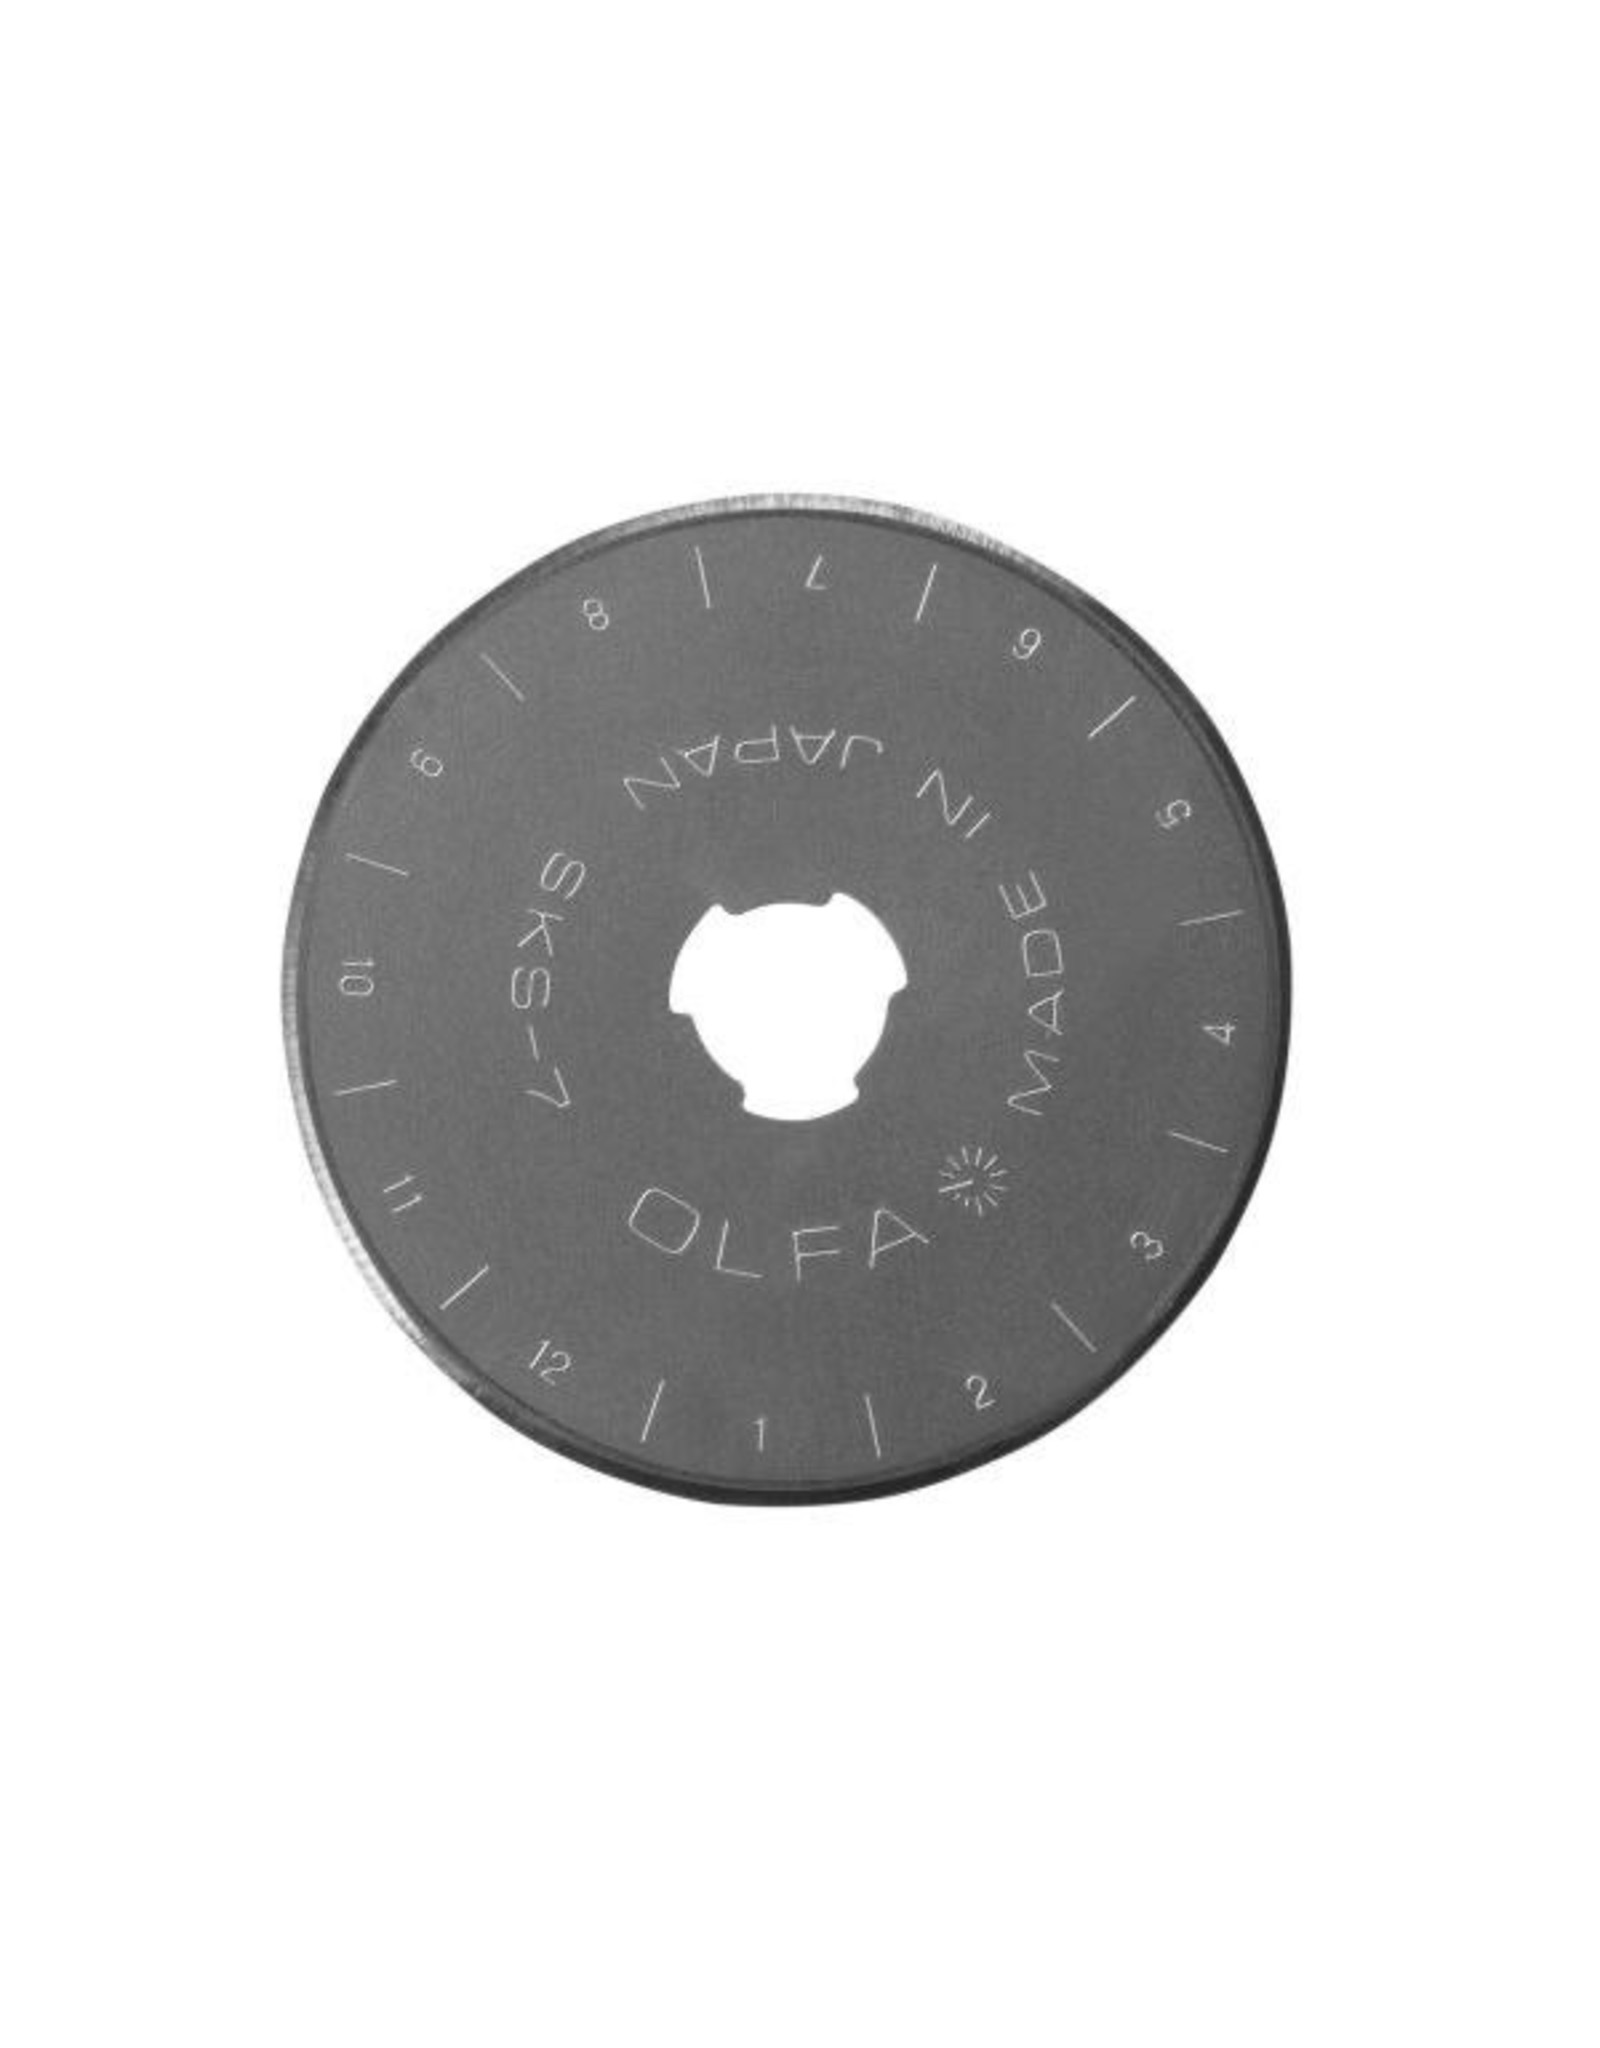 Olfa Olfa Rotary Replacement Blade 45mm - 2ct